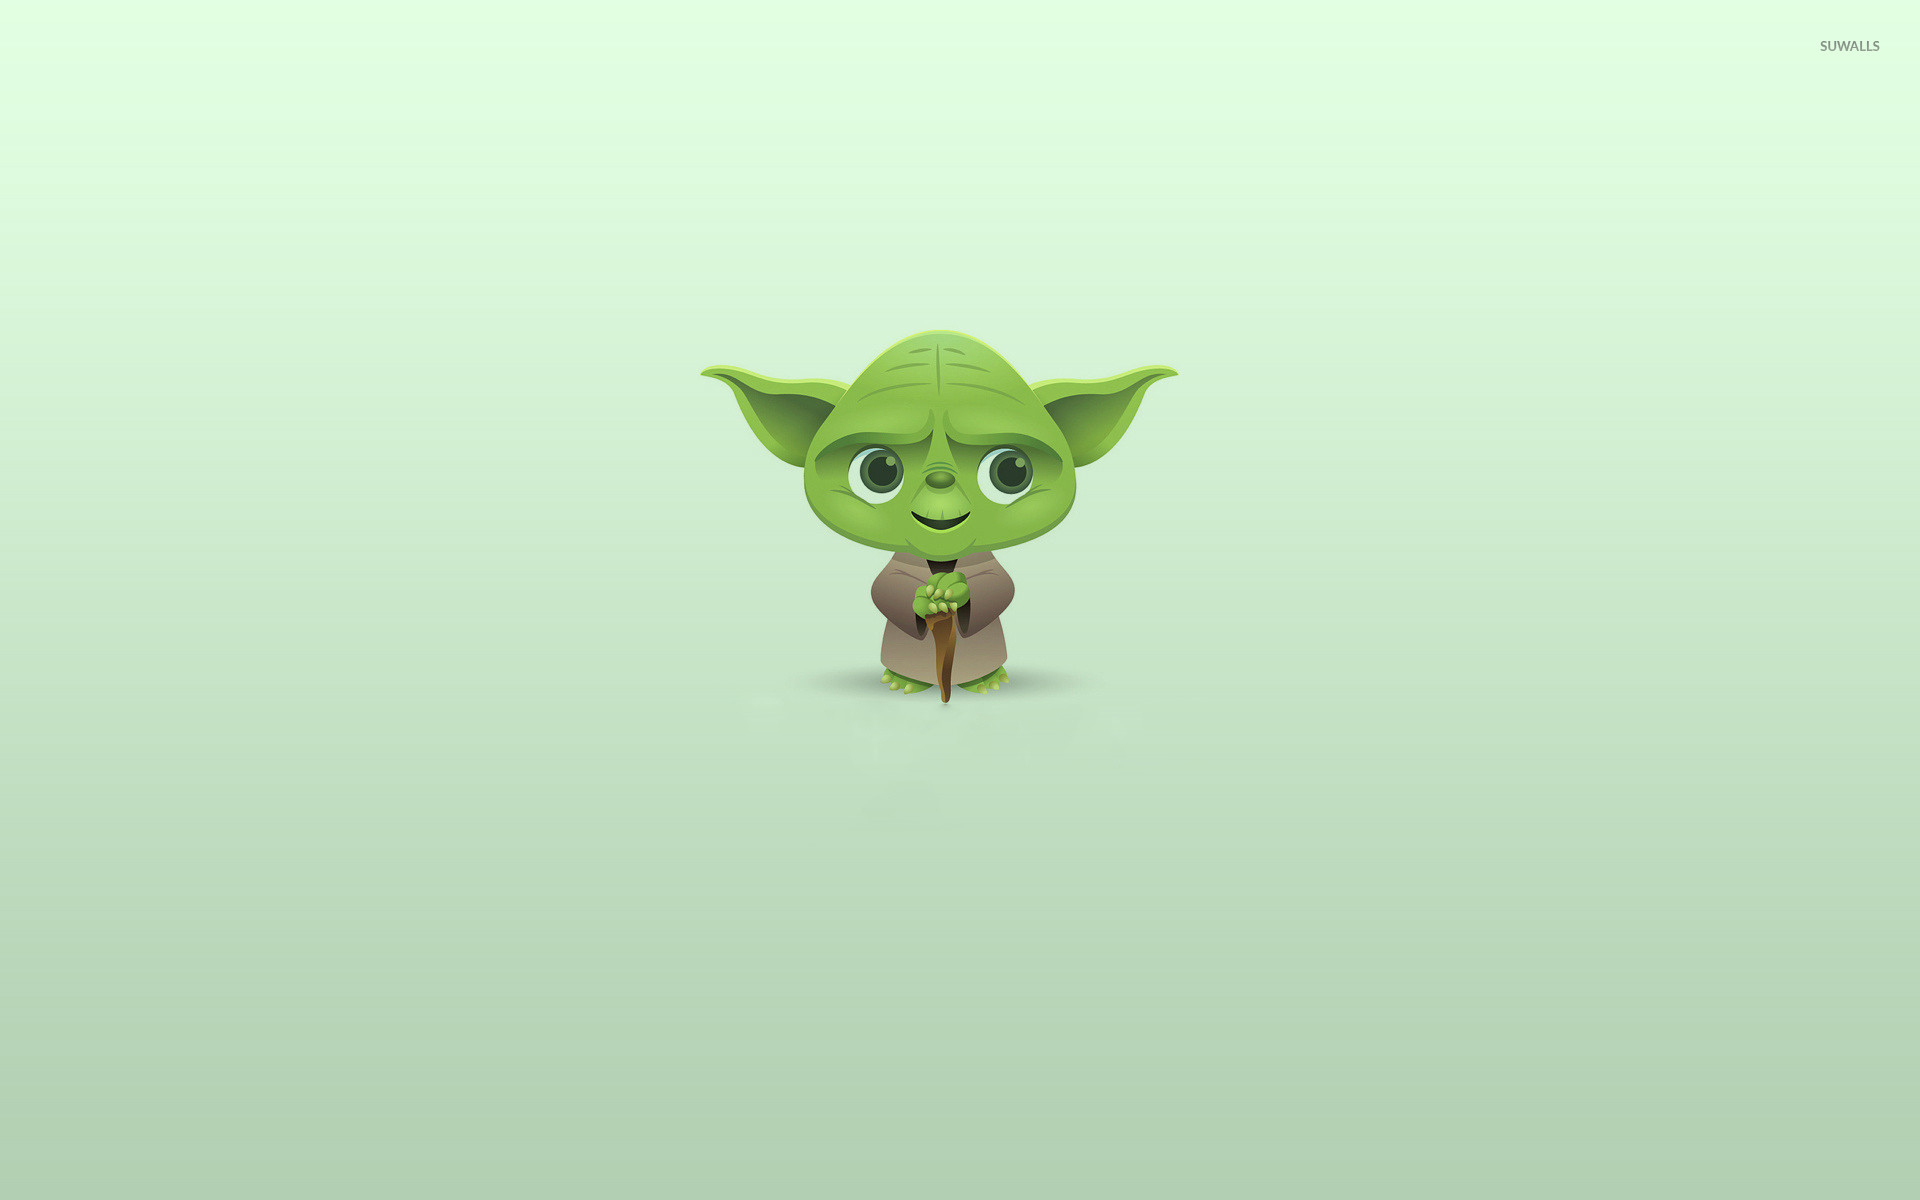 yoda iphone wallpaper,yoda,green,fictional character,illustration,animation